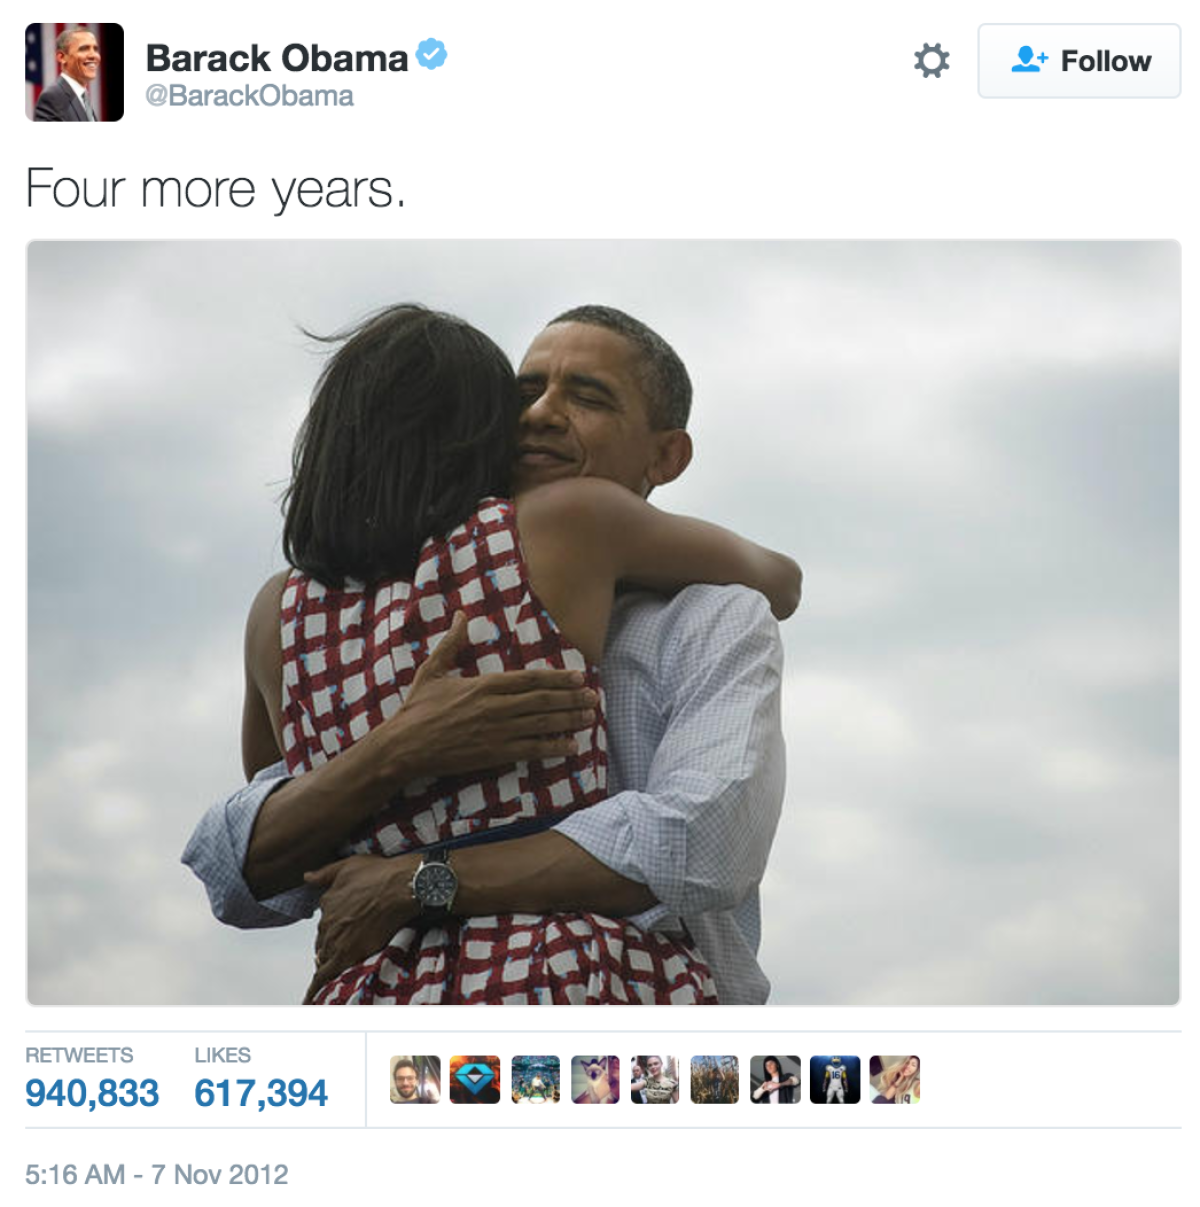 Barack Obama tweet